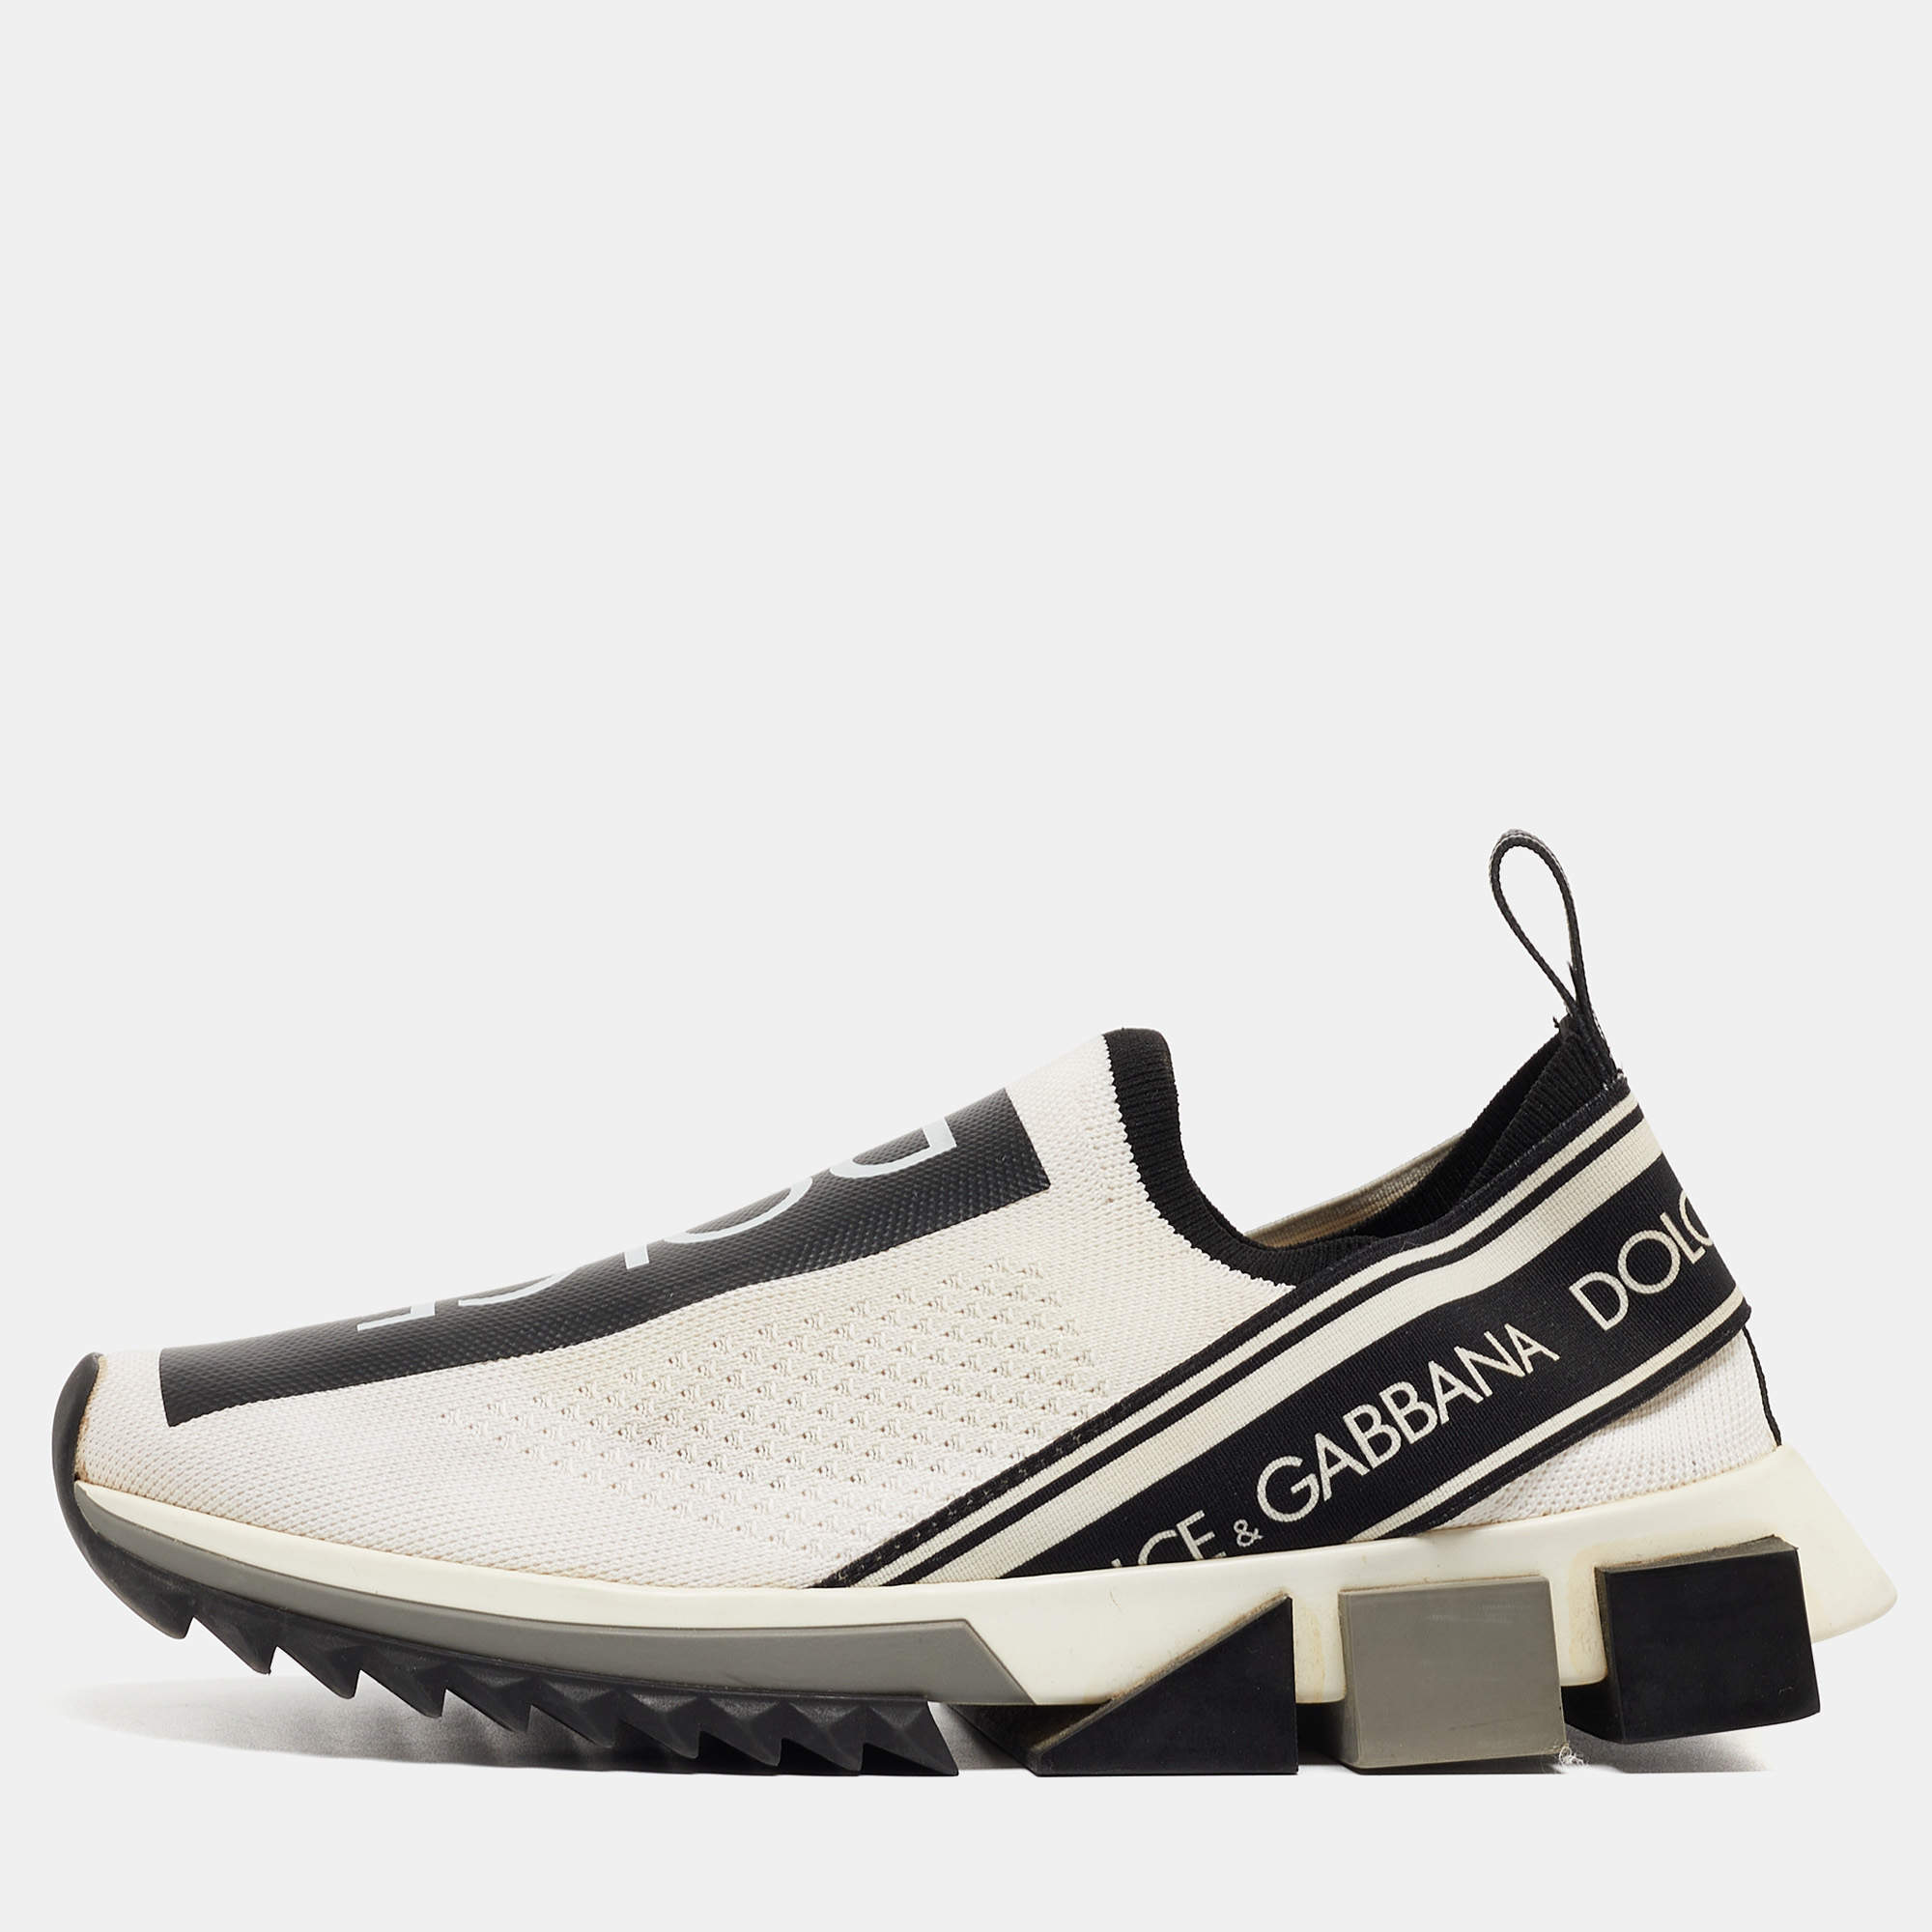 Dolce & Gabbana White/Black Knit Fabric Sorrento Sneakers Size 39